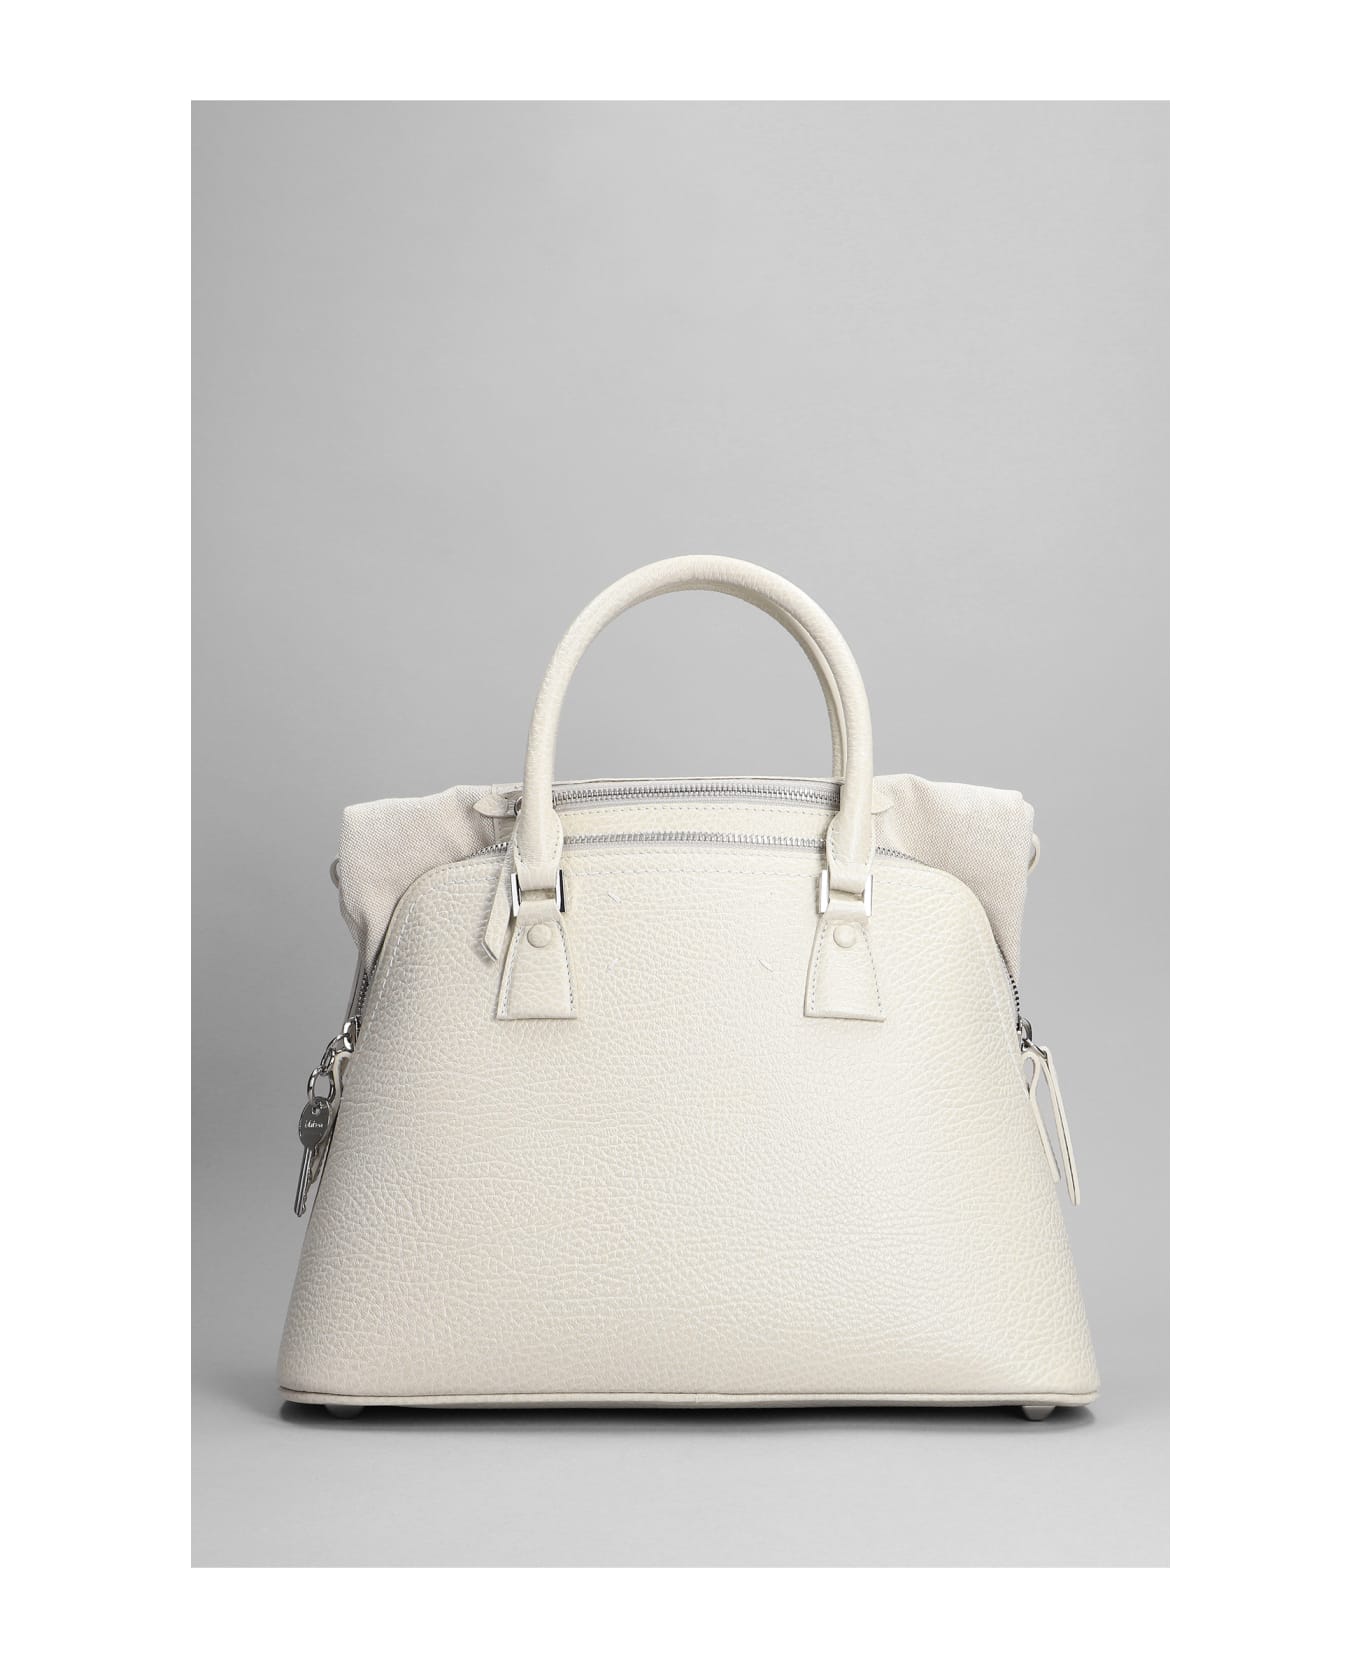 Maison Margiela Hand Bag In White Leather - white